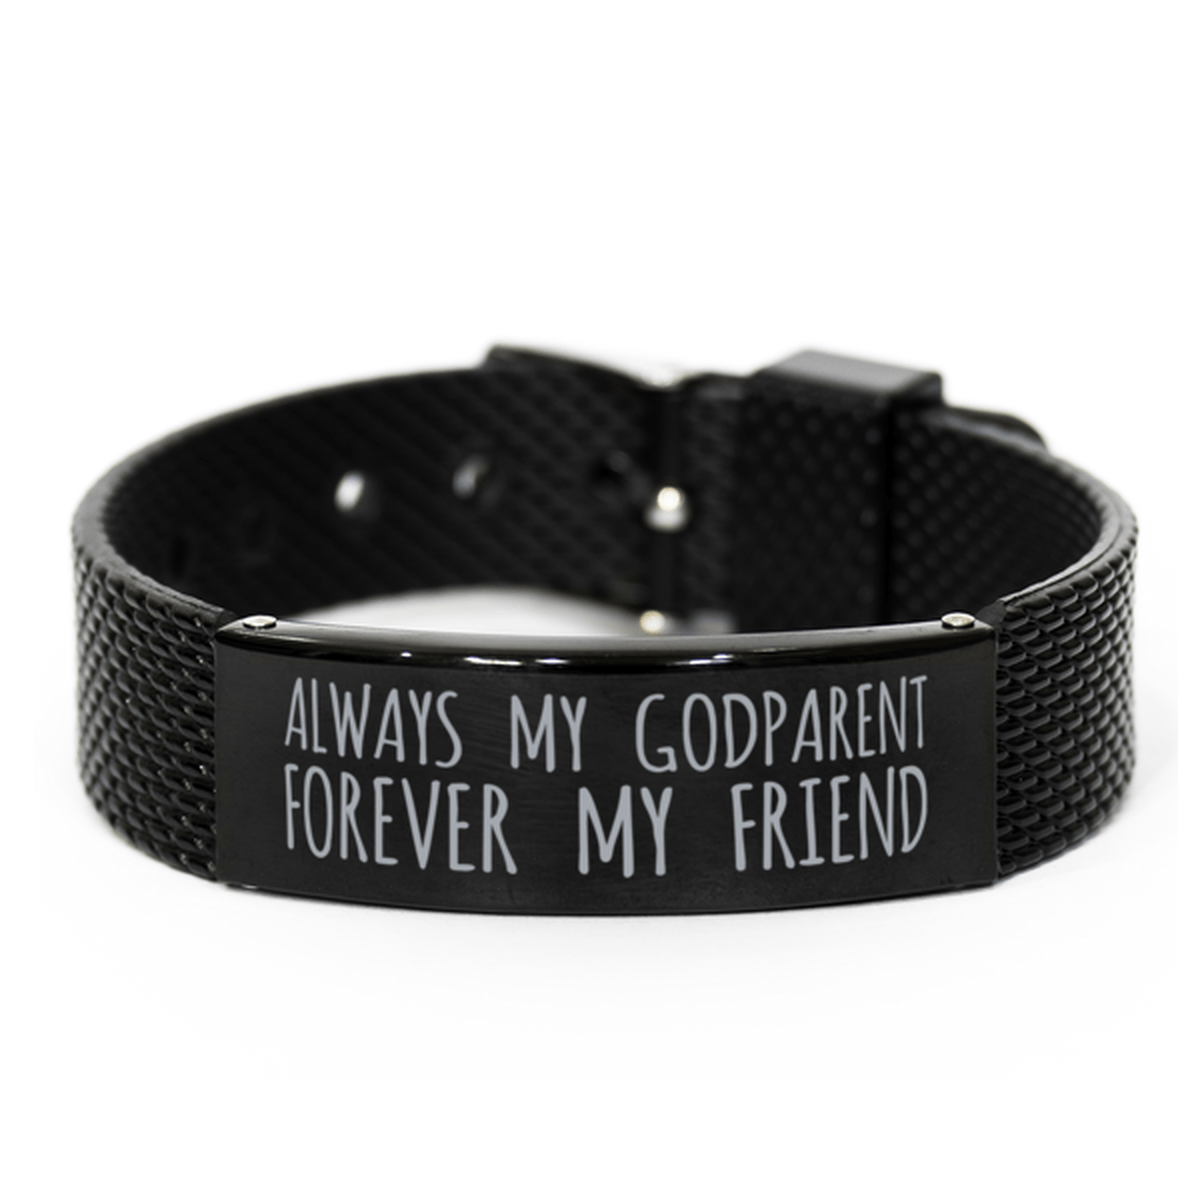 Inspirational Godparent Black Shark Mesh Bracelet, Always My Godparent Forever My Friend, Best Birthday Gifts for Family Friends